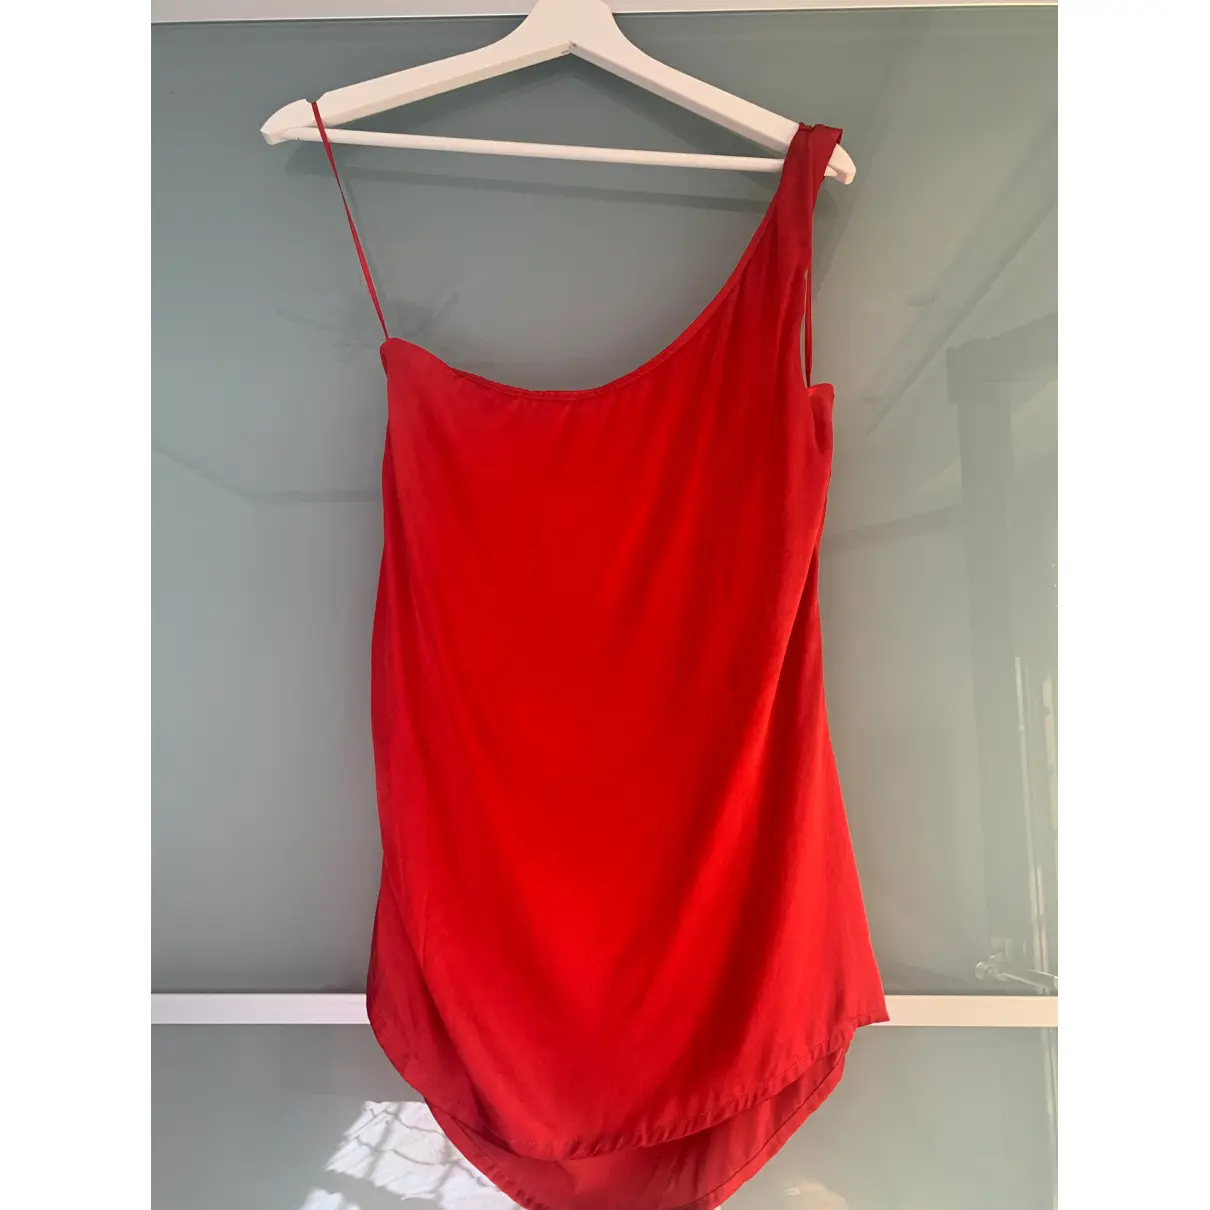 Buy RELISH Silk camisole online